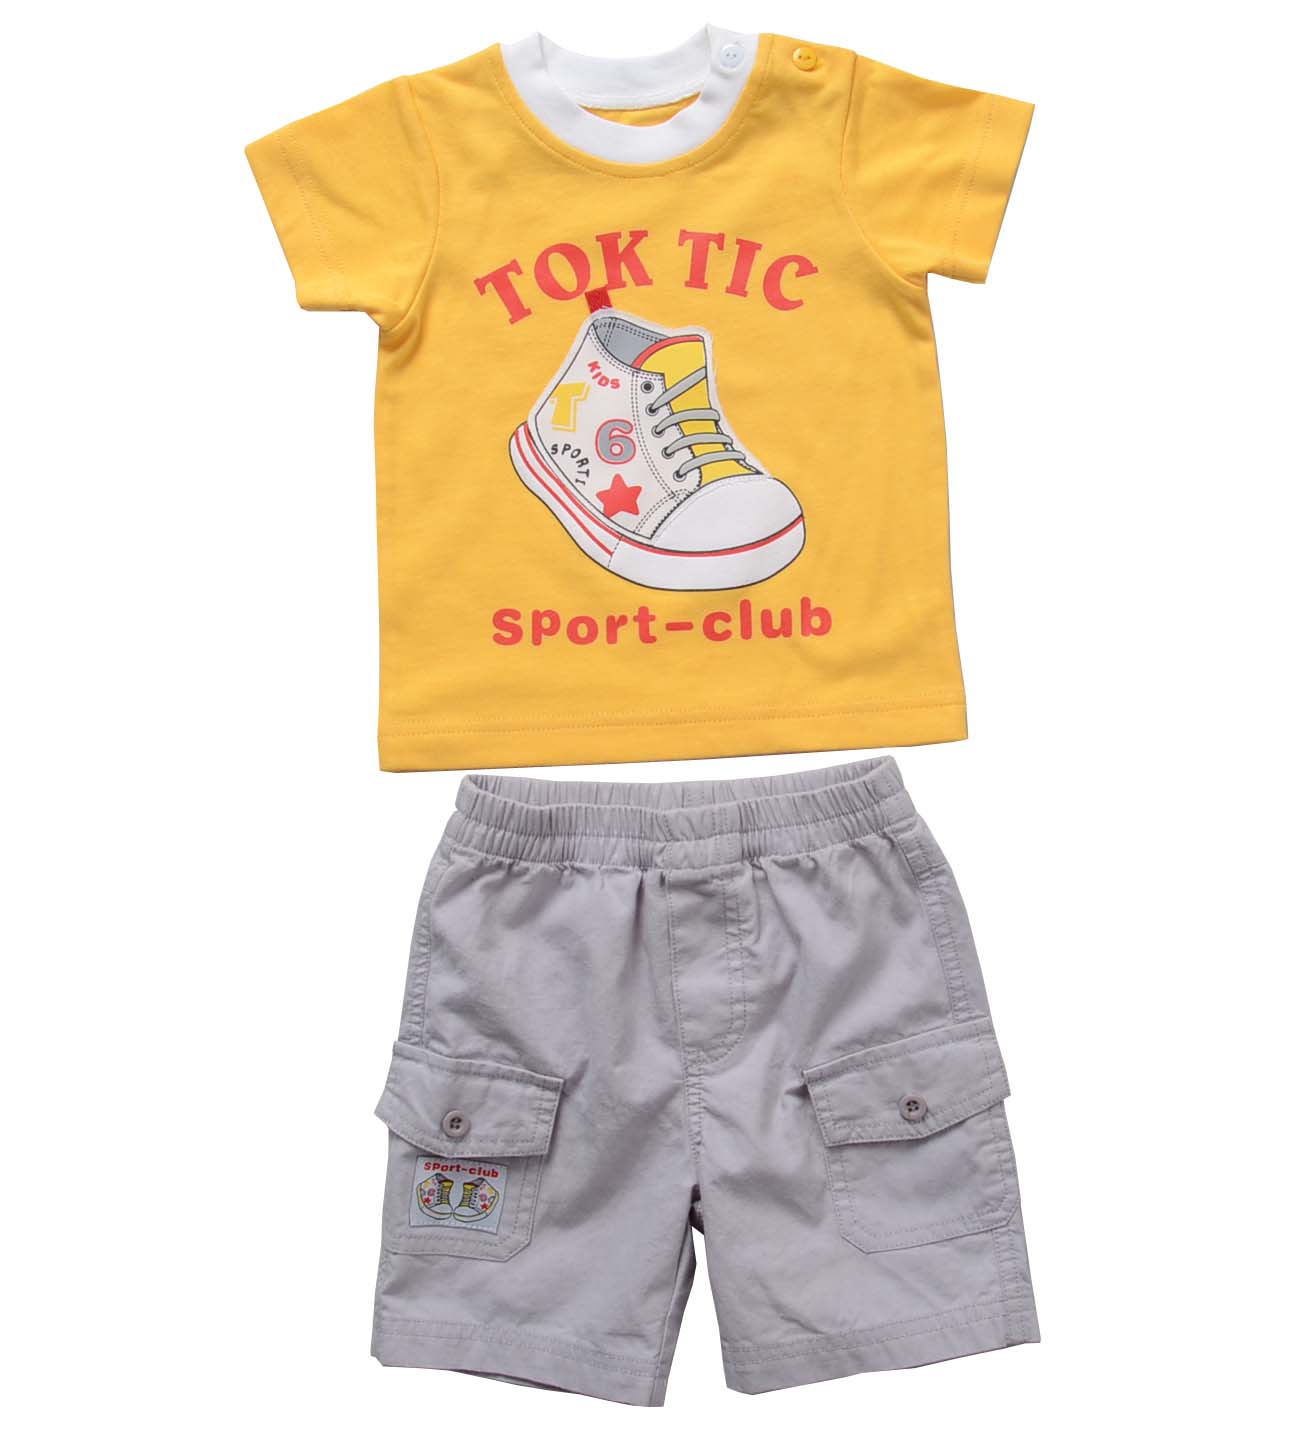 kids clothing set baby boy cotton t shirt short pants children set for summer boy cartoon